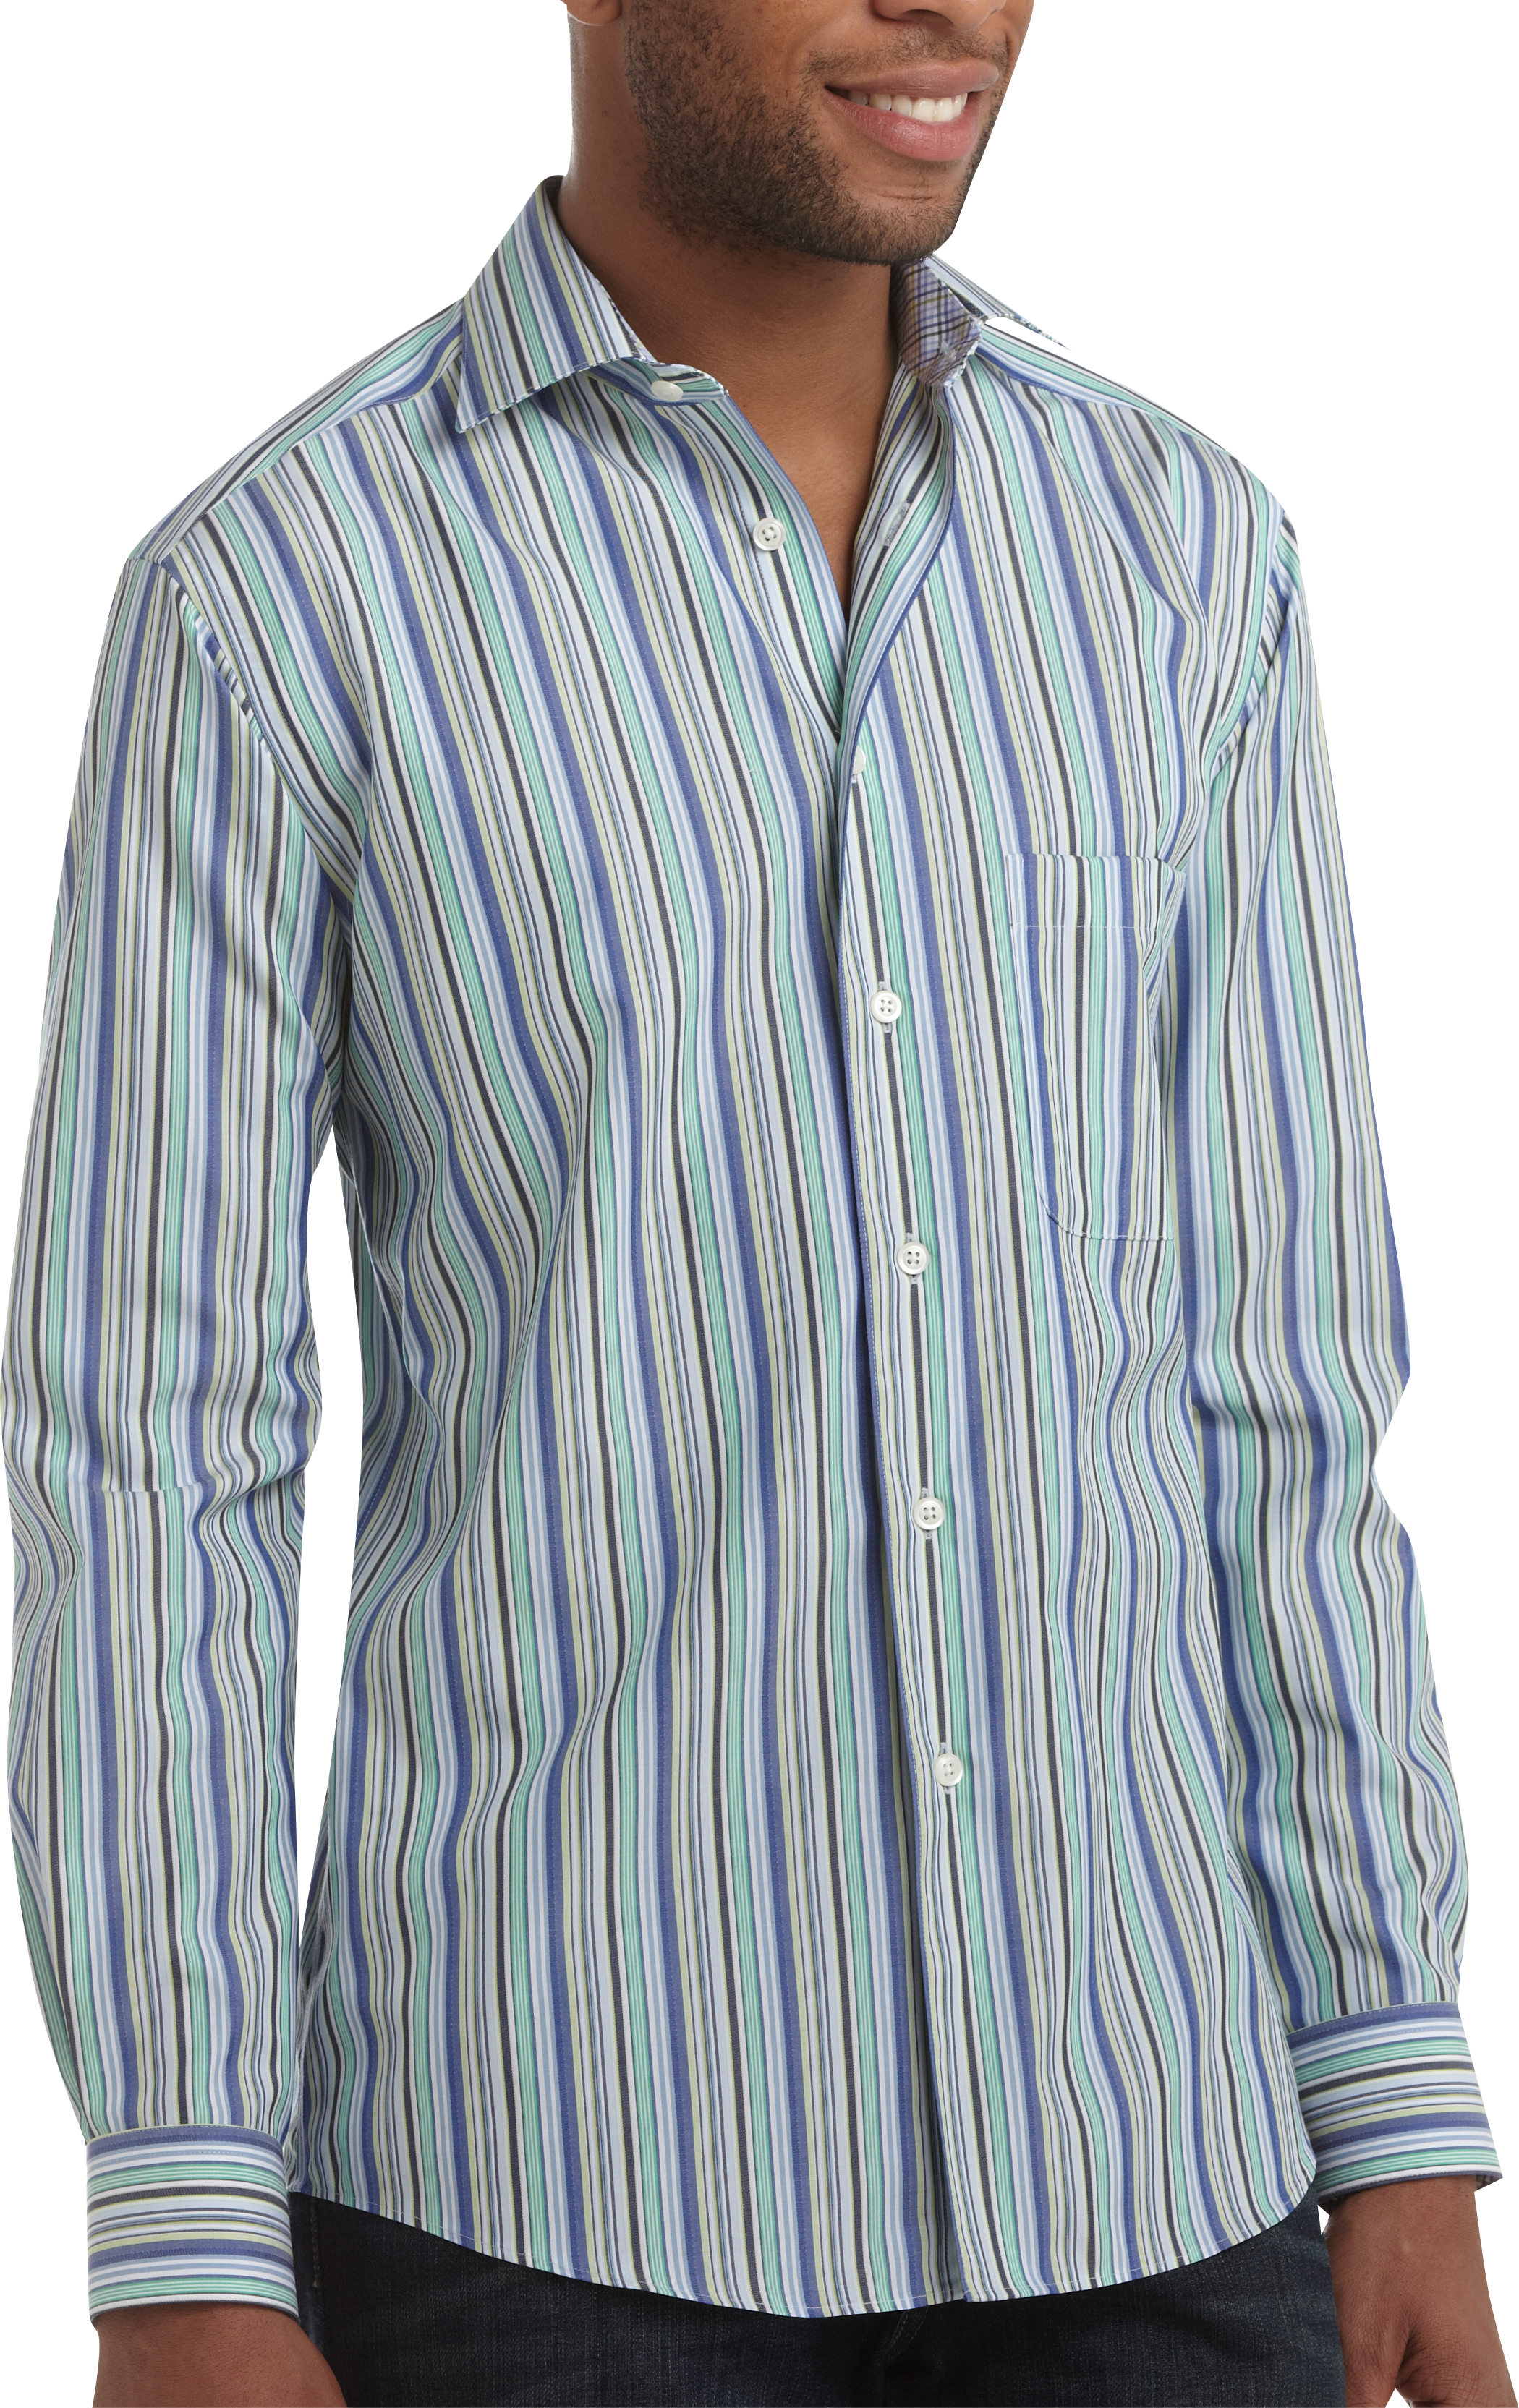 Pronto Uomo Blue and Green Stripe Modern Fit Sport Shirt - Men's Shirts ...